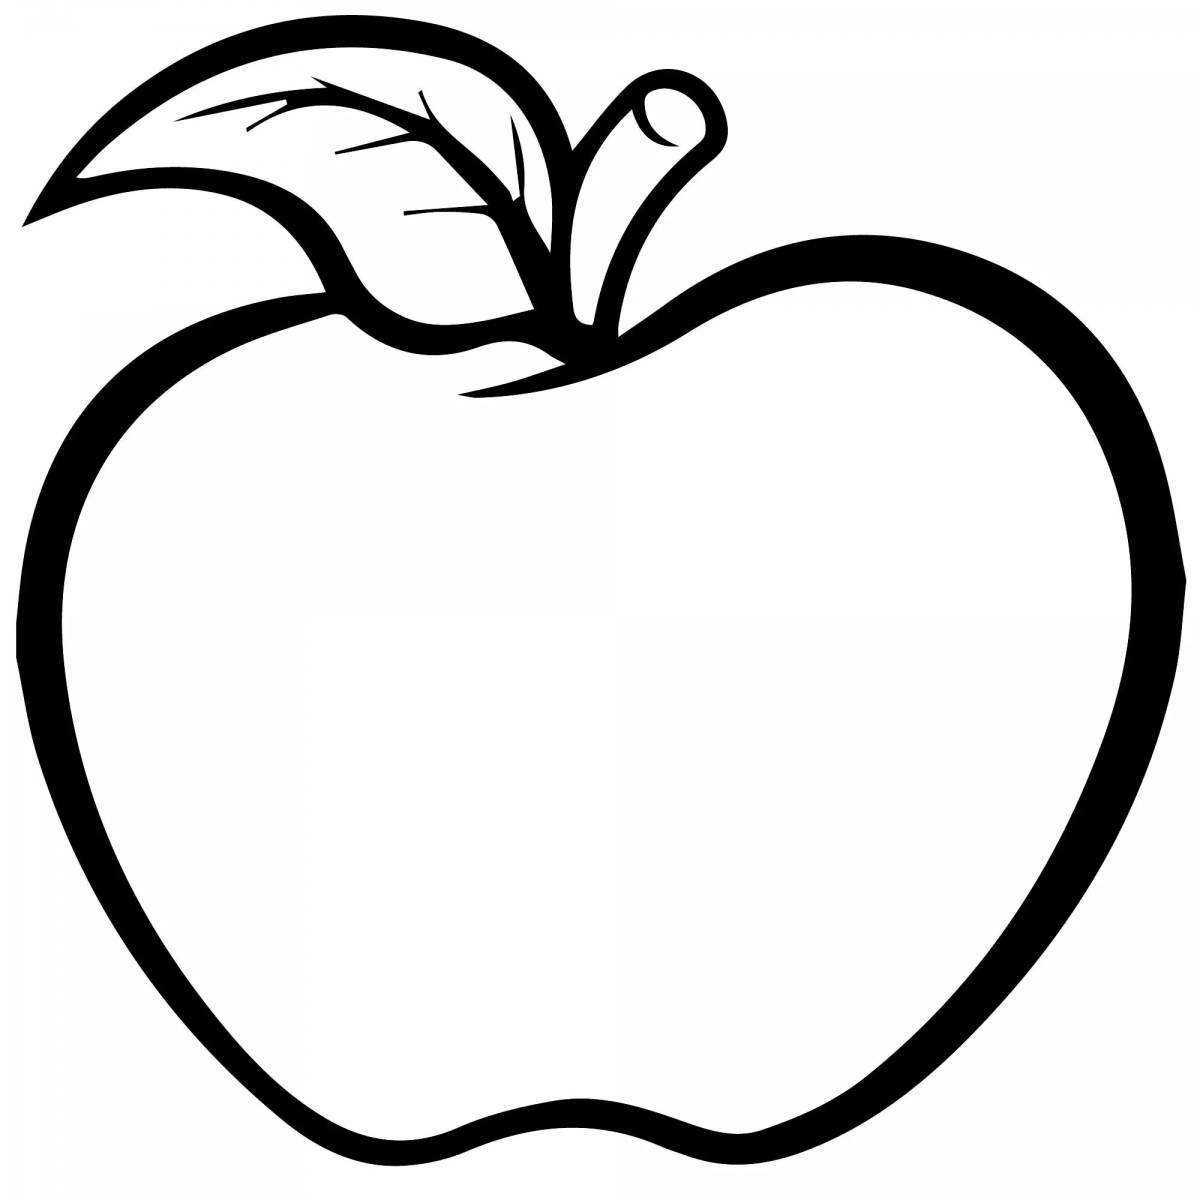 Цветная страница раскраски apple